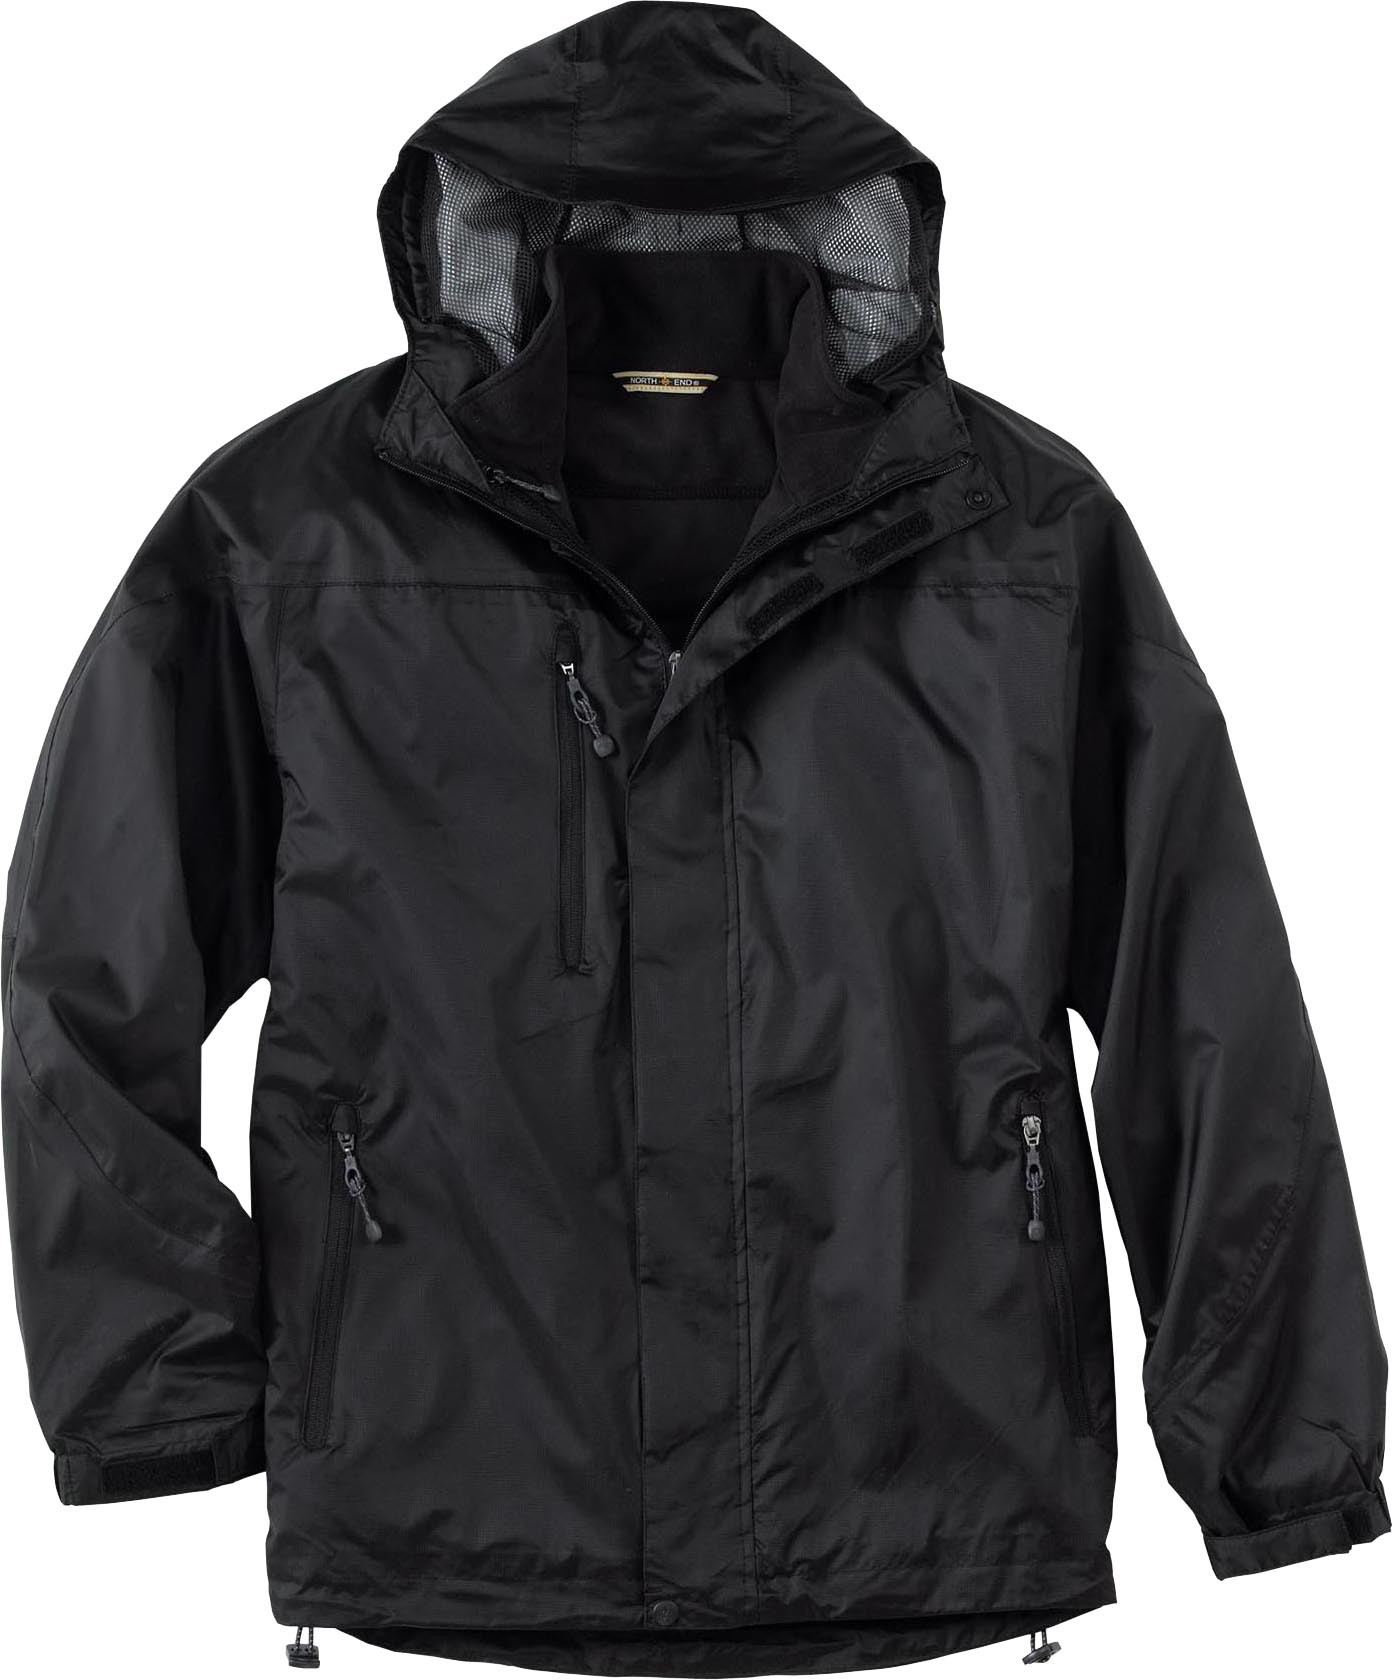 Ash City UTK 2 Warm.Logik 88120 - Men's 3-In-1 Techno Performance Seam-Sealed Hooded Jacket